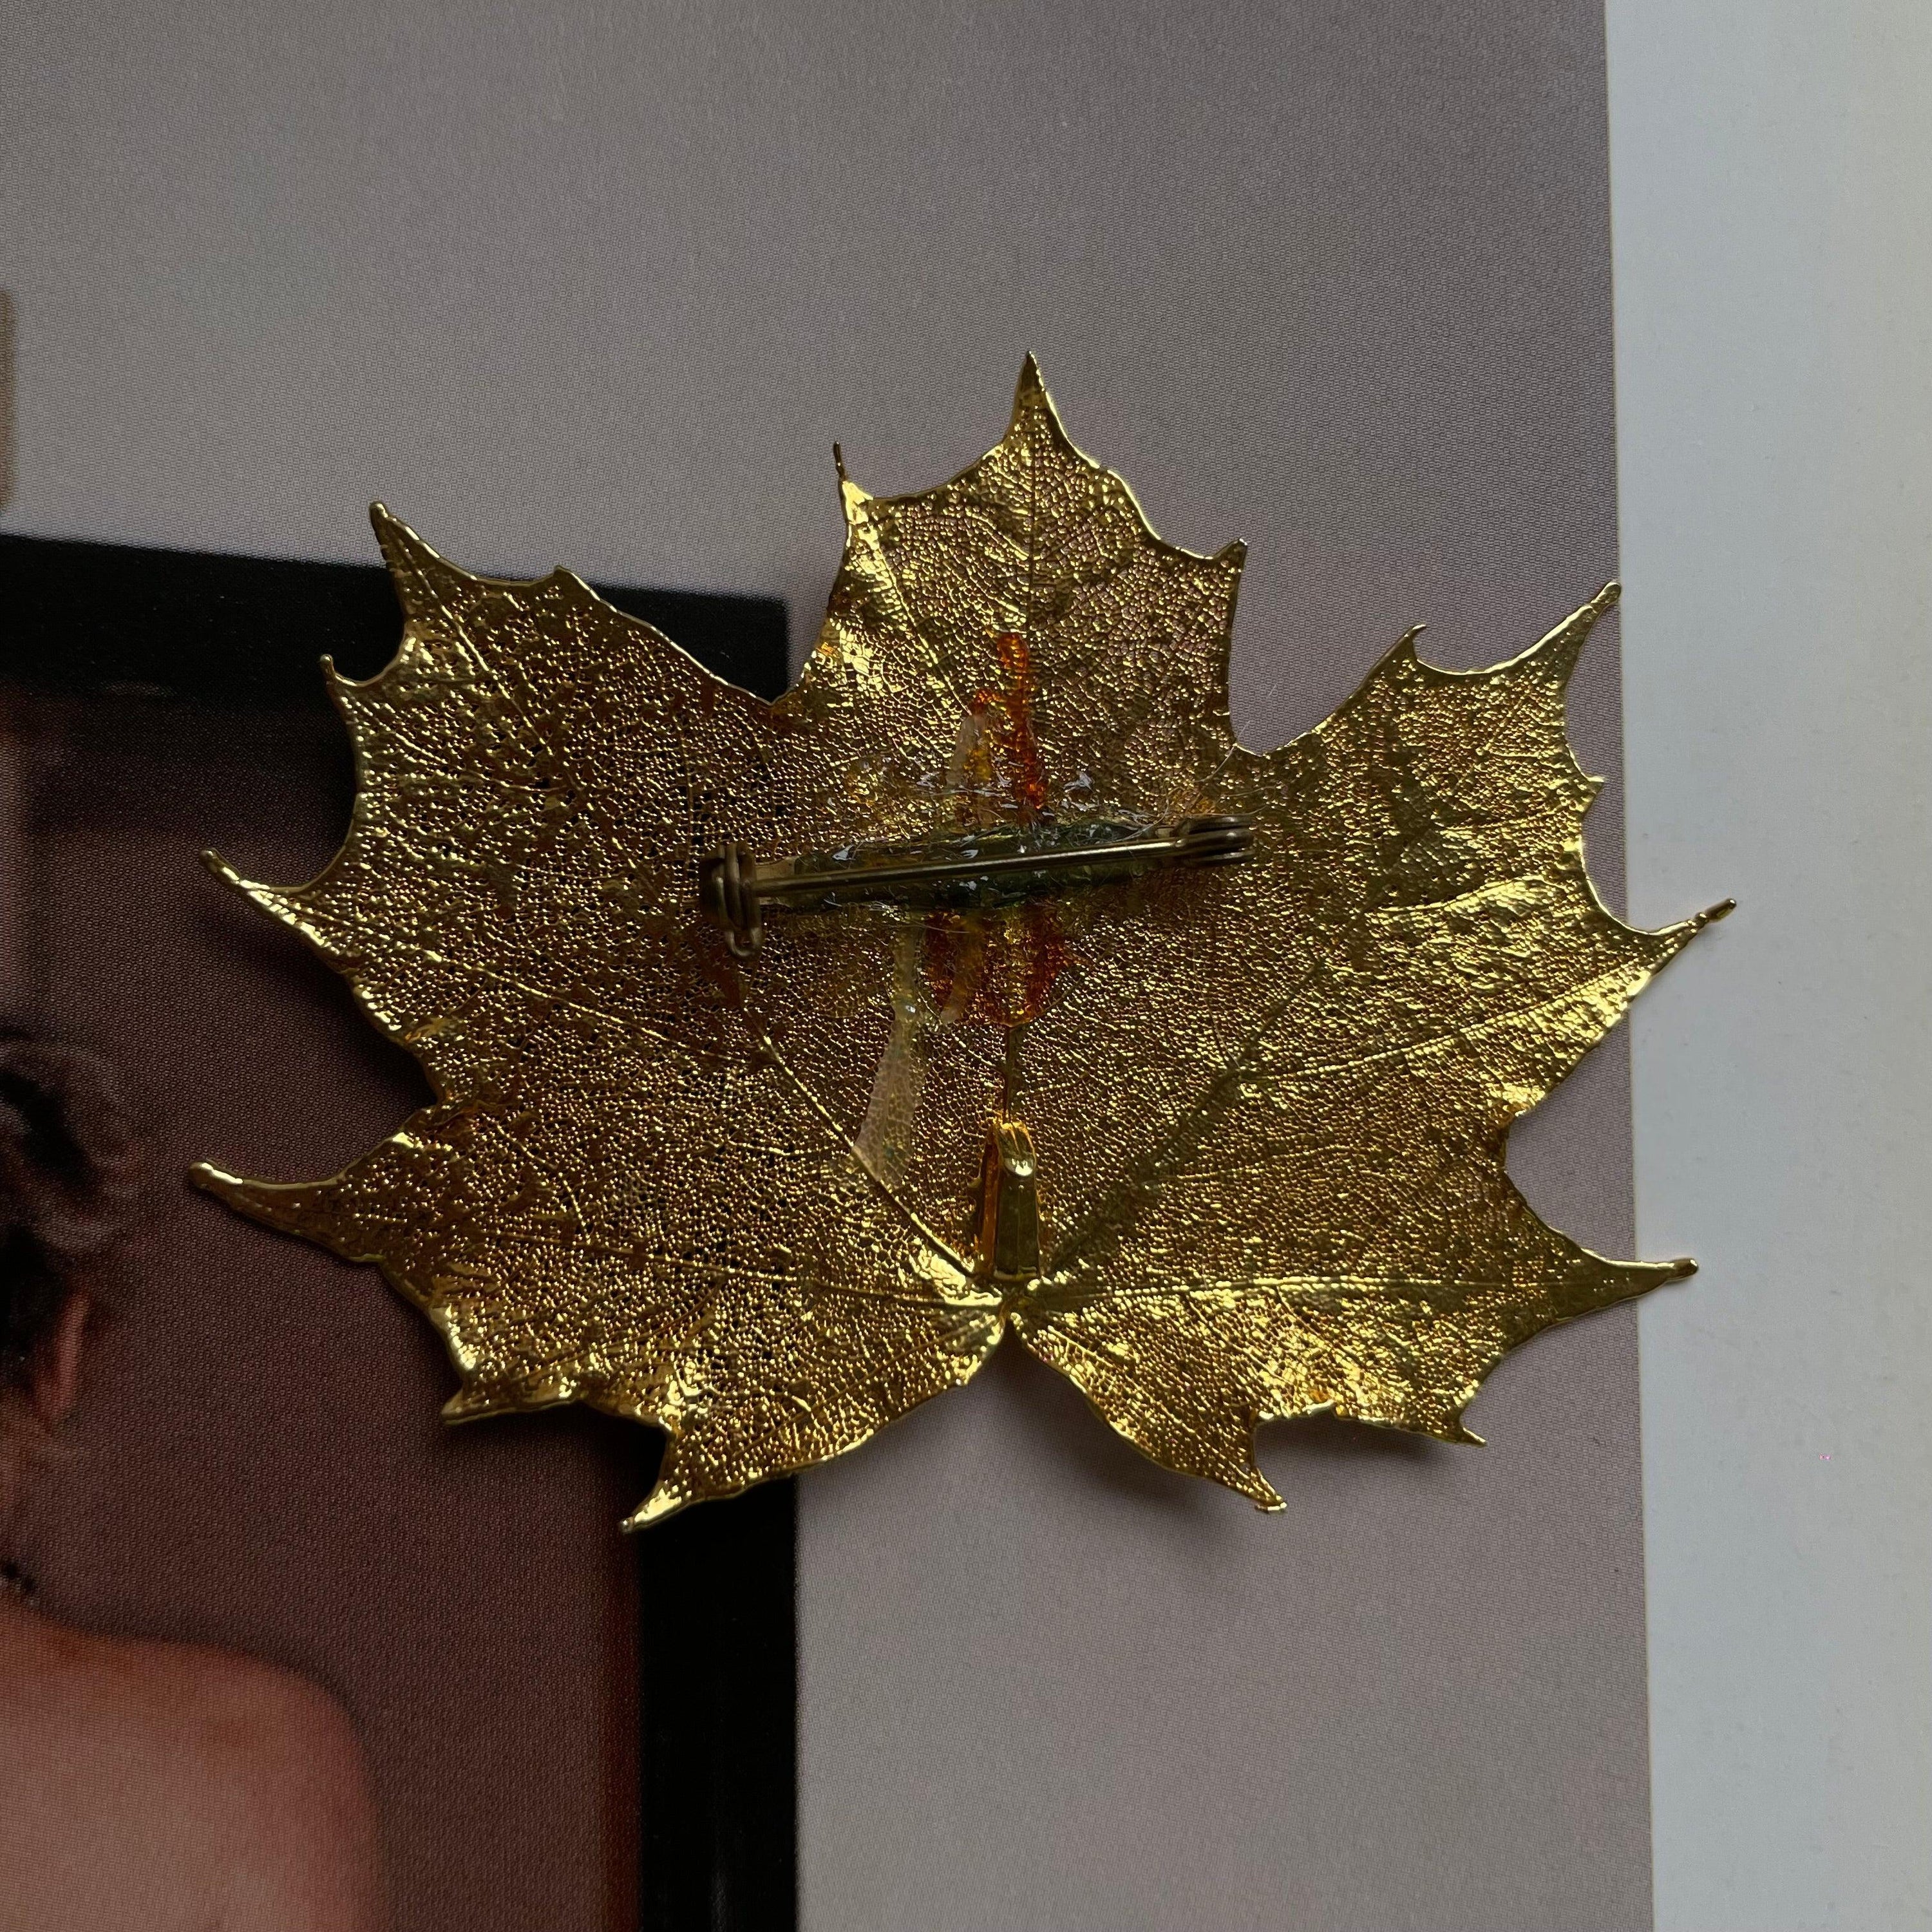 Vintage 1970s 24k Gold Dipped Leaf Brooch or pendant necklace - WŪHAŪS